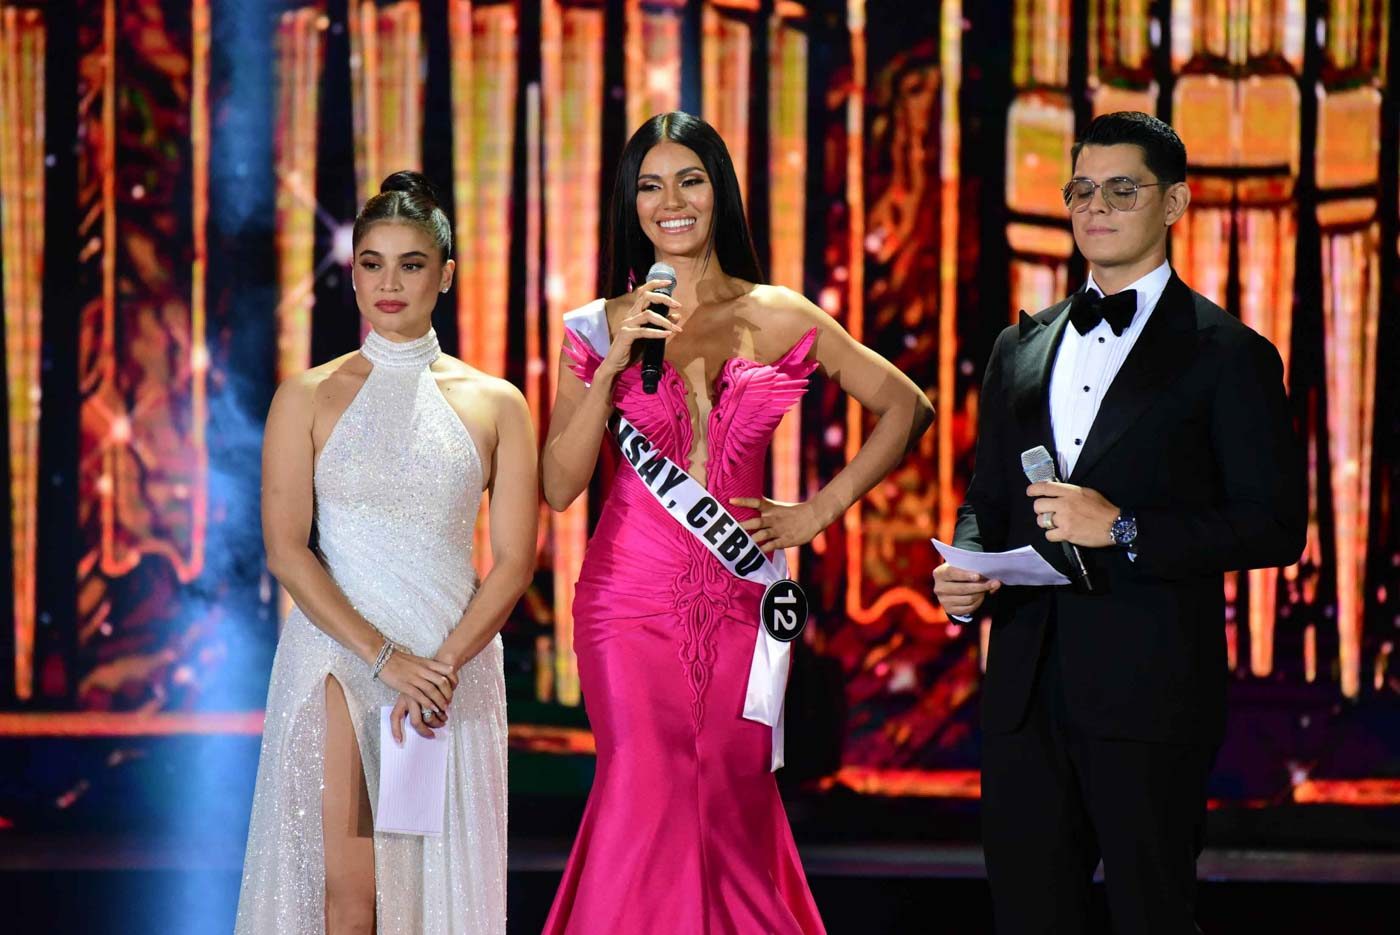 READ: Gazini Christiana Ganados’ winning answer at Binibining Pilipinas 2019